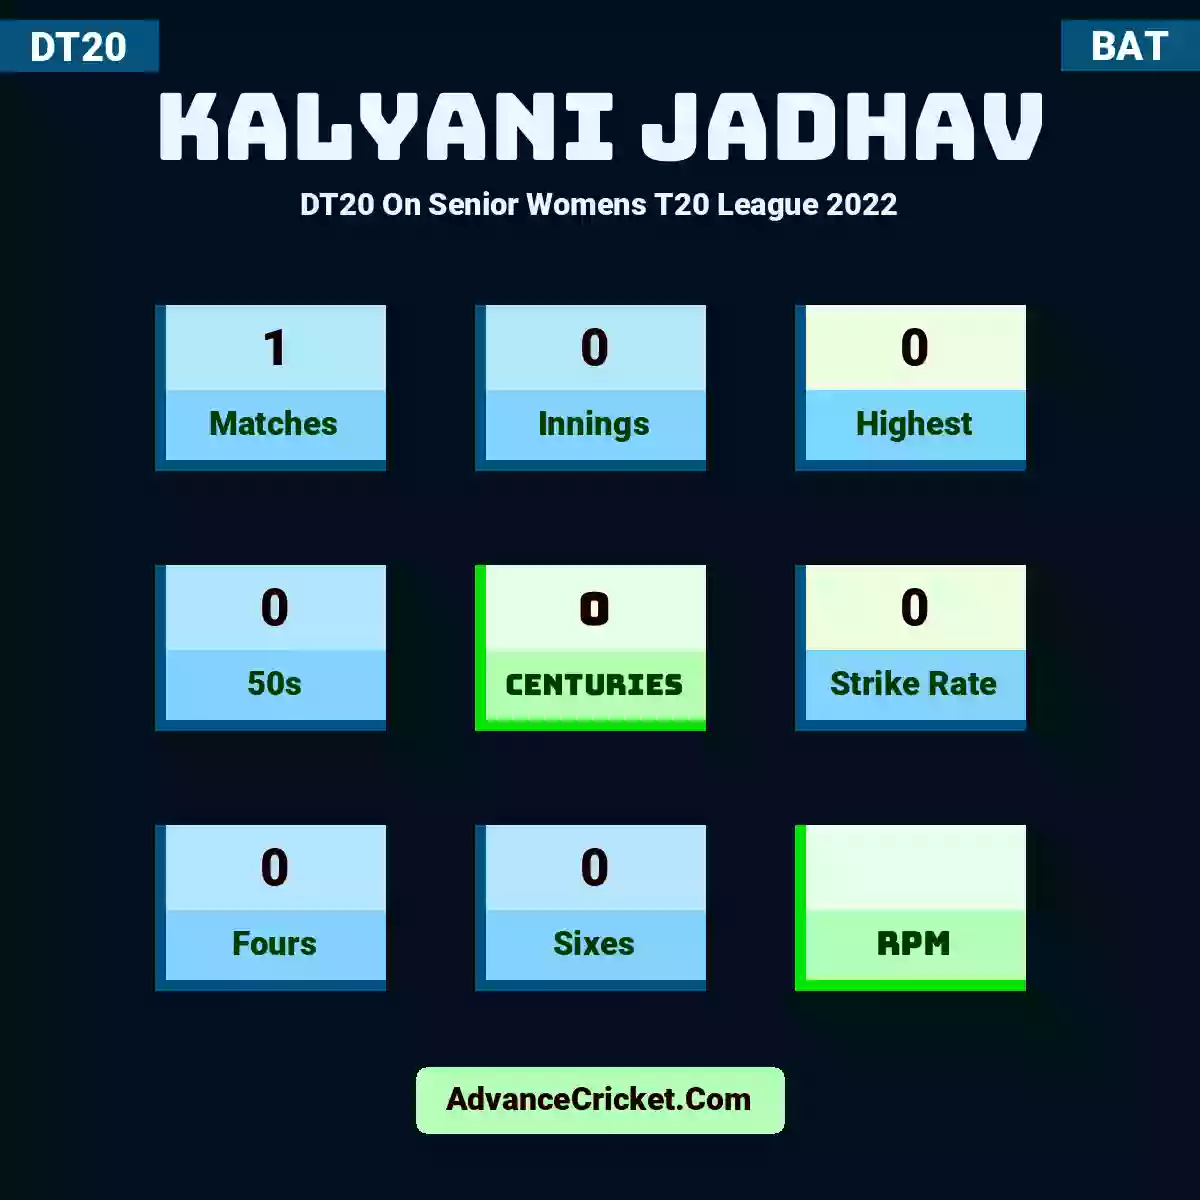 Kalyani Jadhav DT20  On Senior Womens T20 League 2022, Kalyani Jadhav played 1 matches, scored 0 runs as highest, 0 half-centuries, and 0 centuries, with a strike rate of 0. K.Jadhav hit 0 fours and 0 sixes.